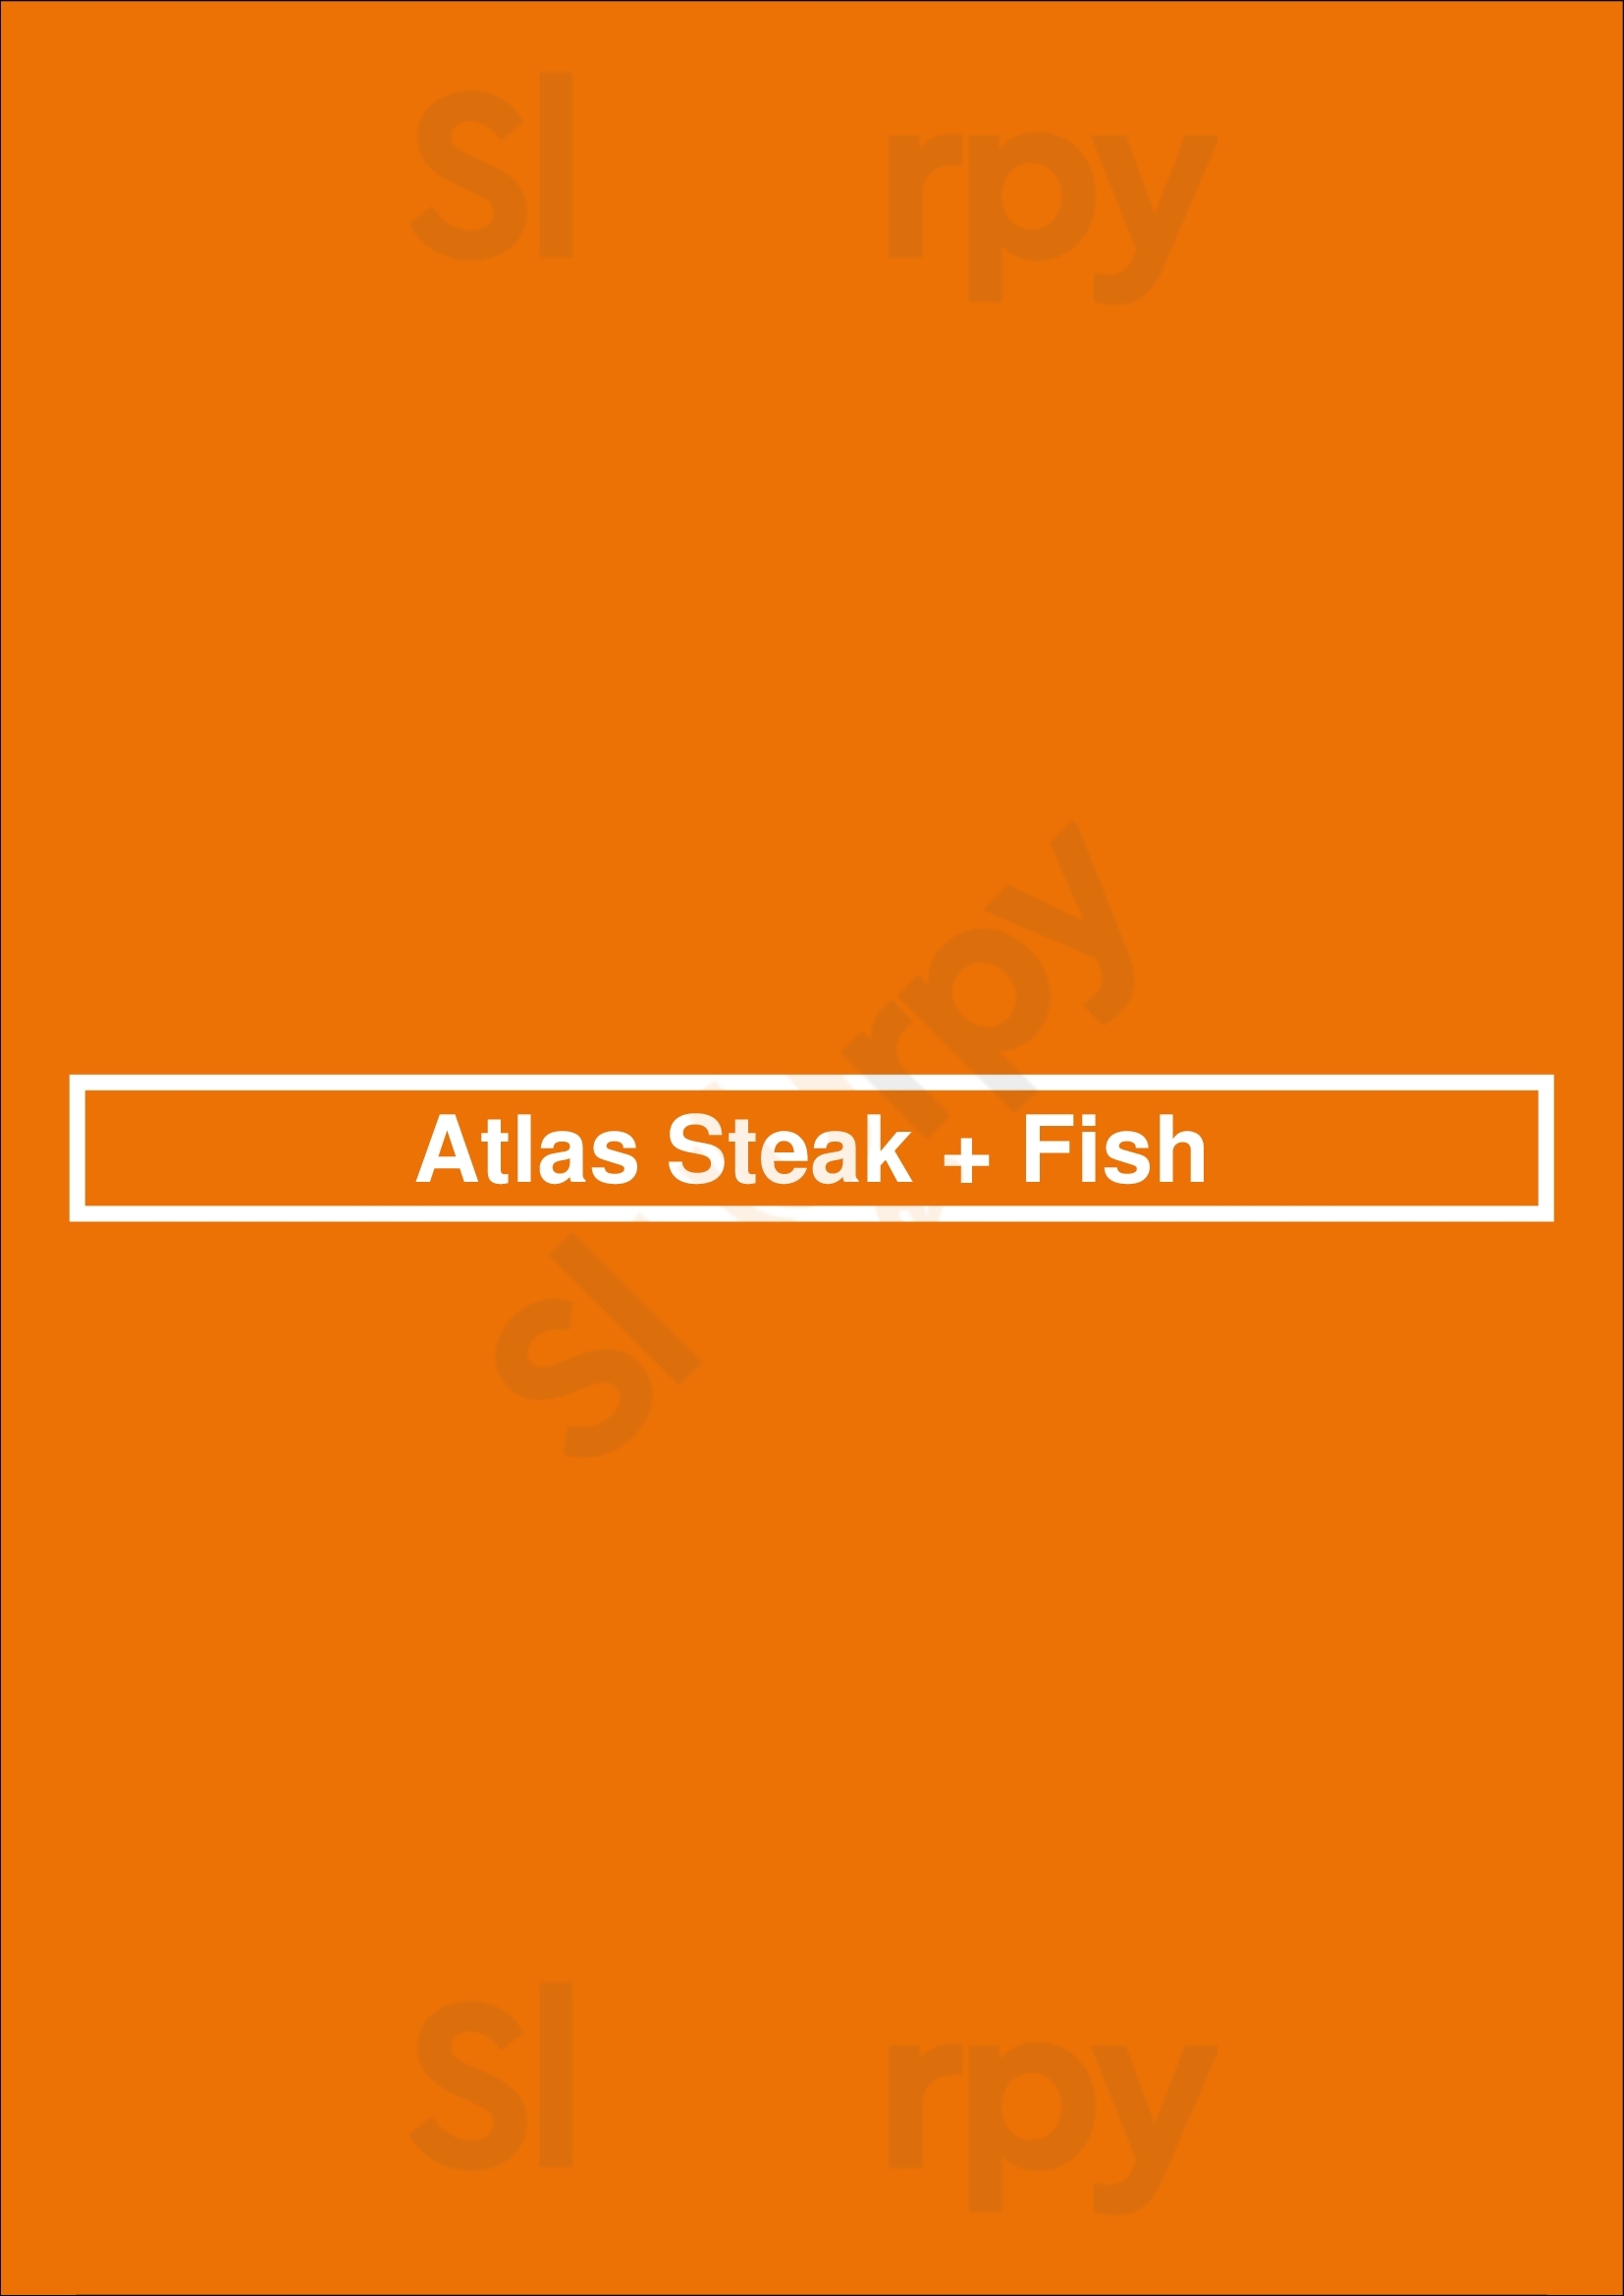 Atlas Steak + Fish Burnaby Menu - 1